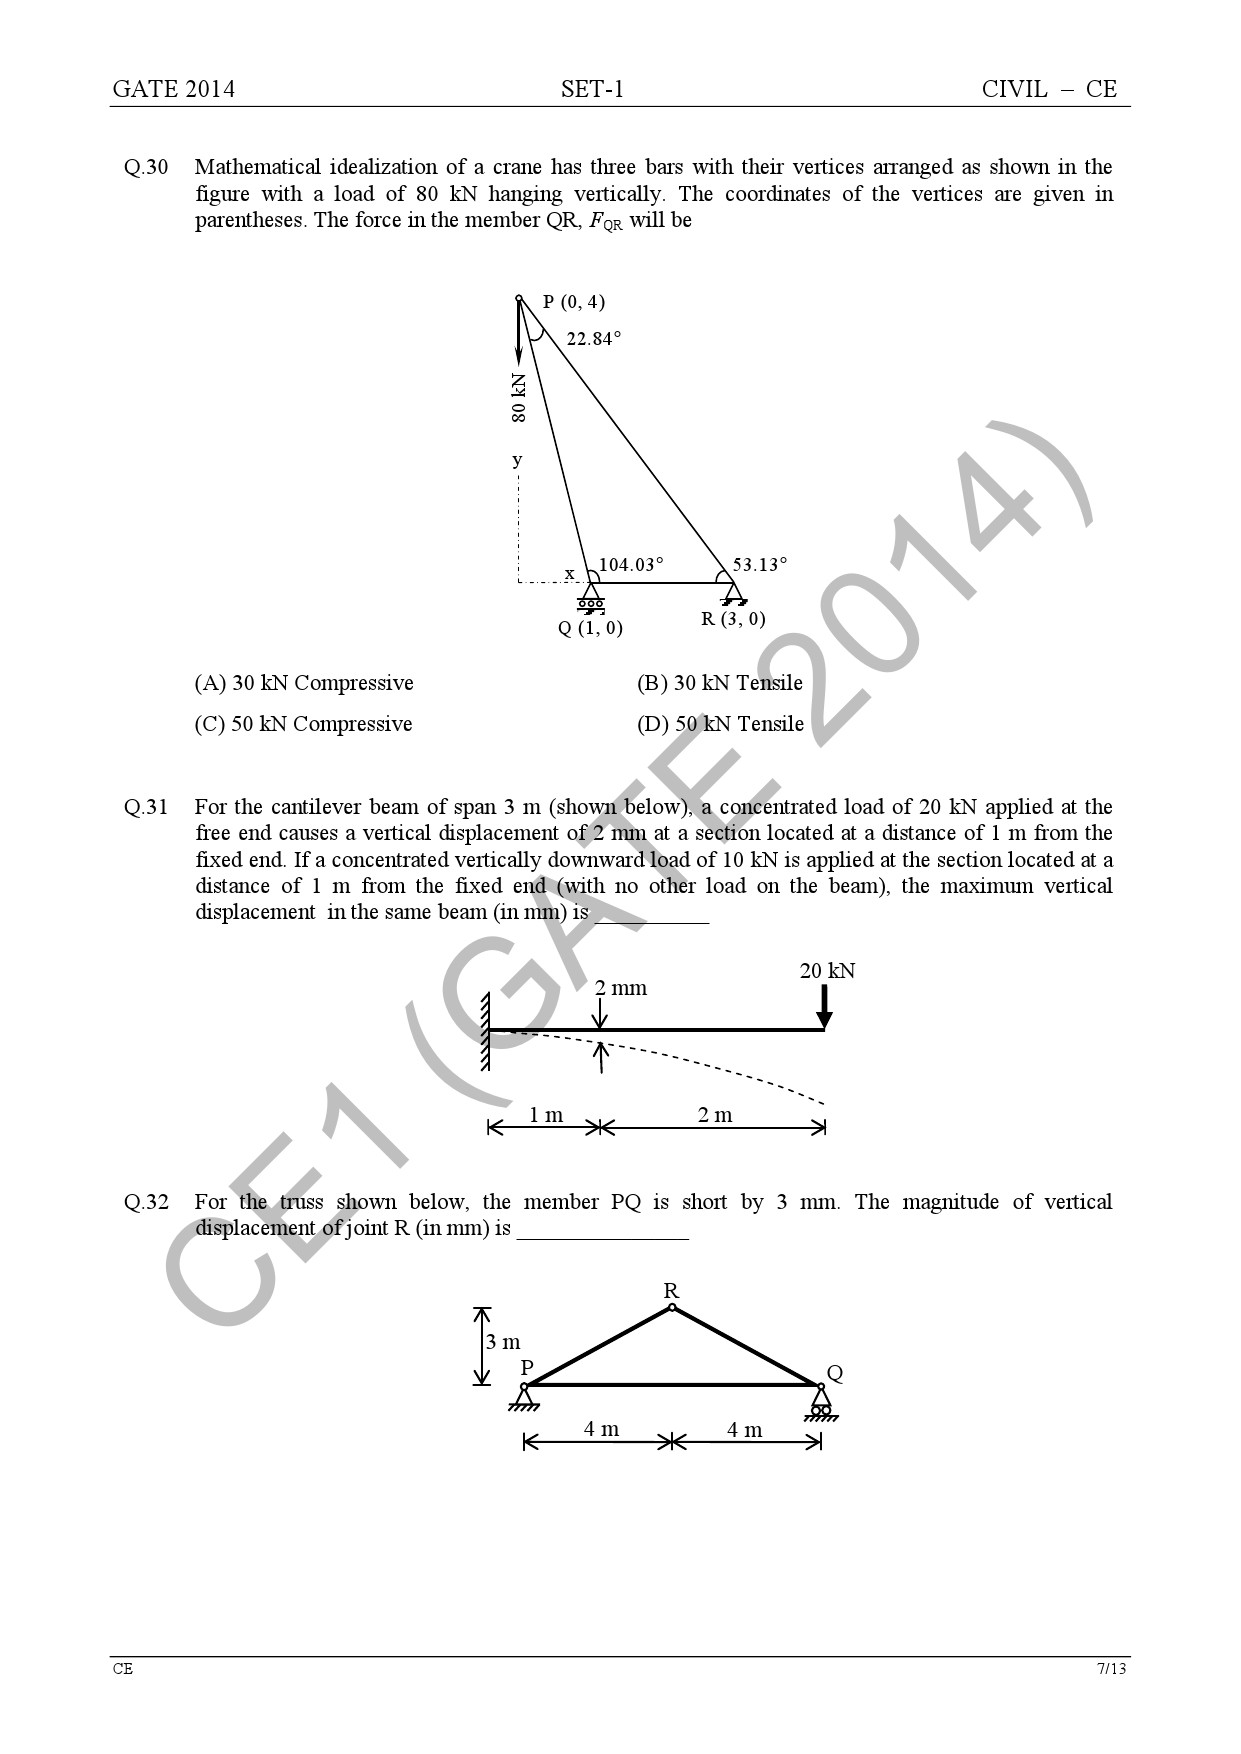 GATE Exam Question Paper 2014 Civil Engineering Set 1 13